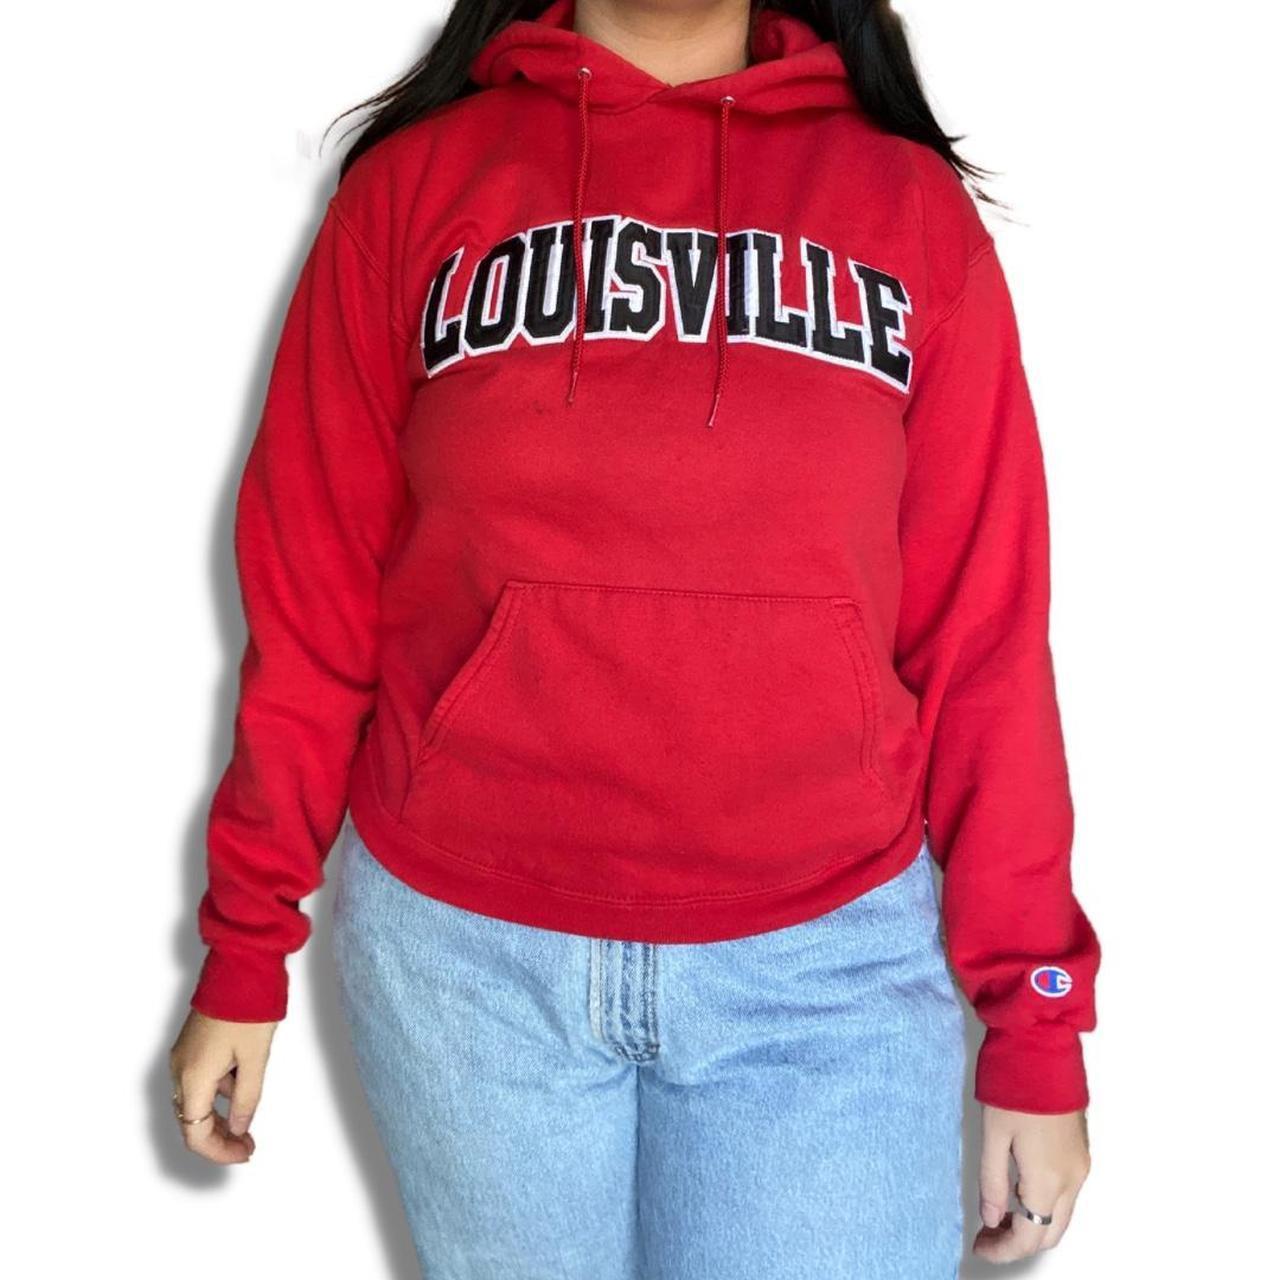 Champion Men's Louisville Cardinals Athletics Logo Pullover Sweatshirt